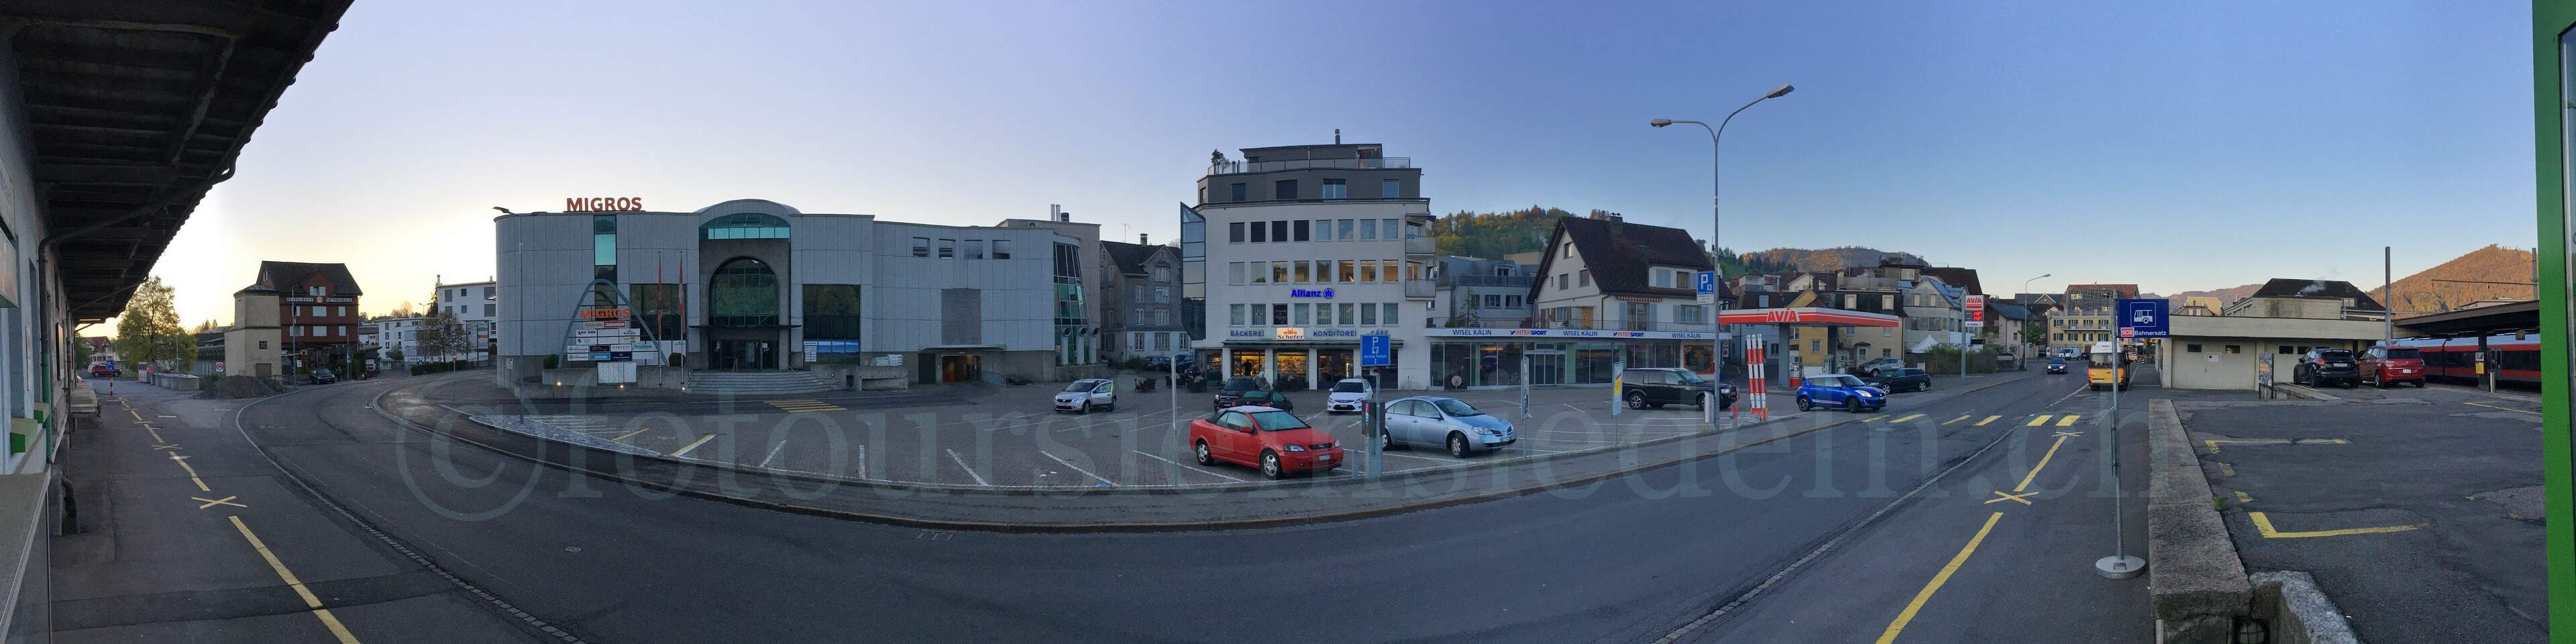 Panorama Einsiedeln 2020 178